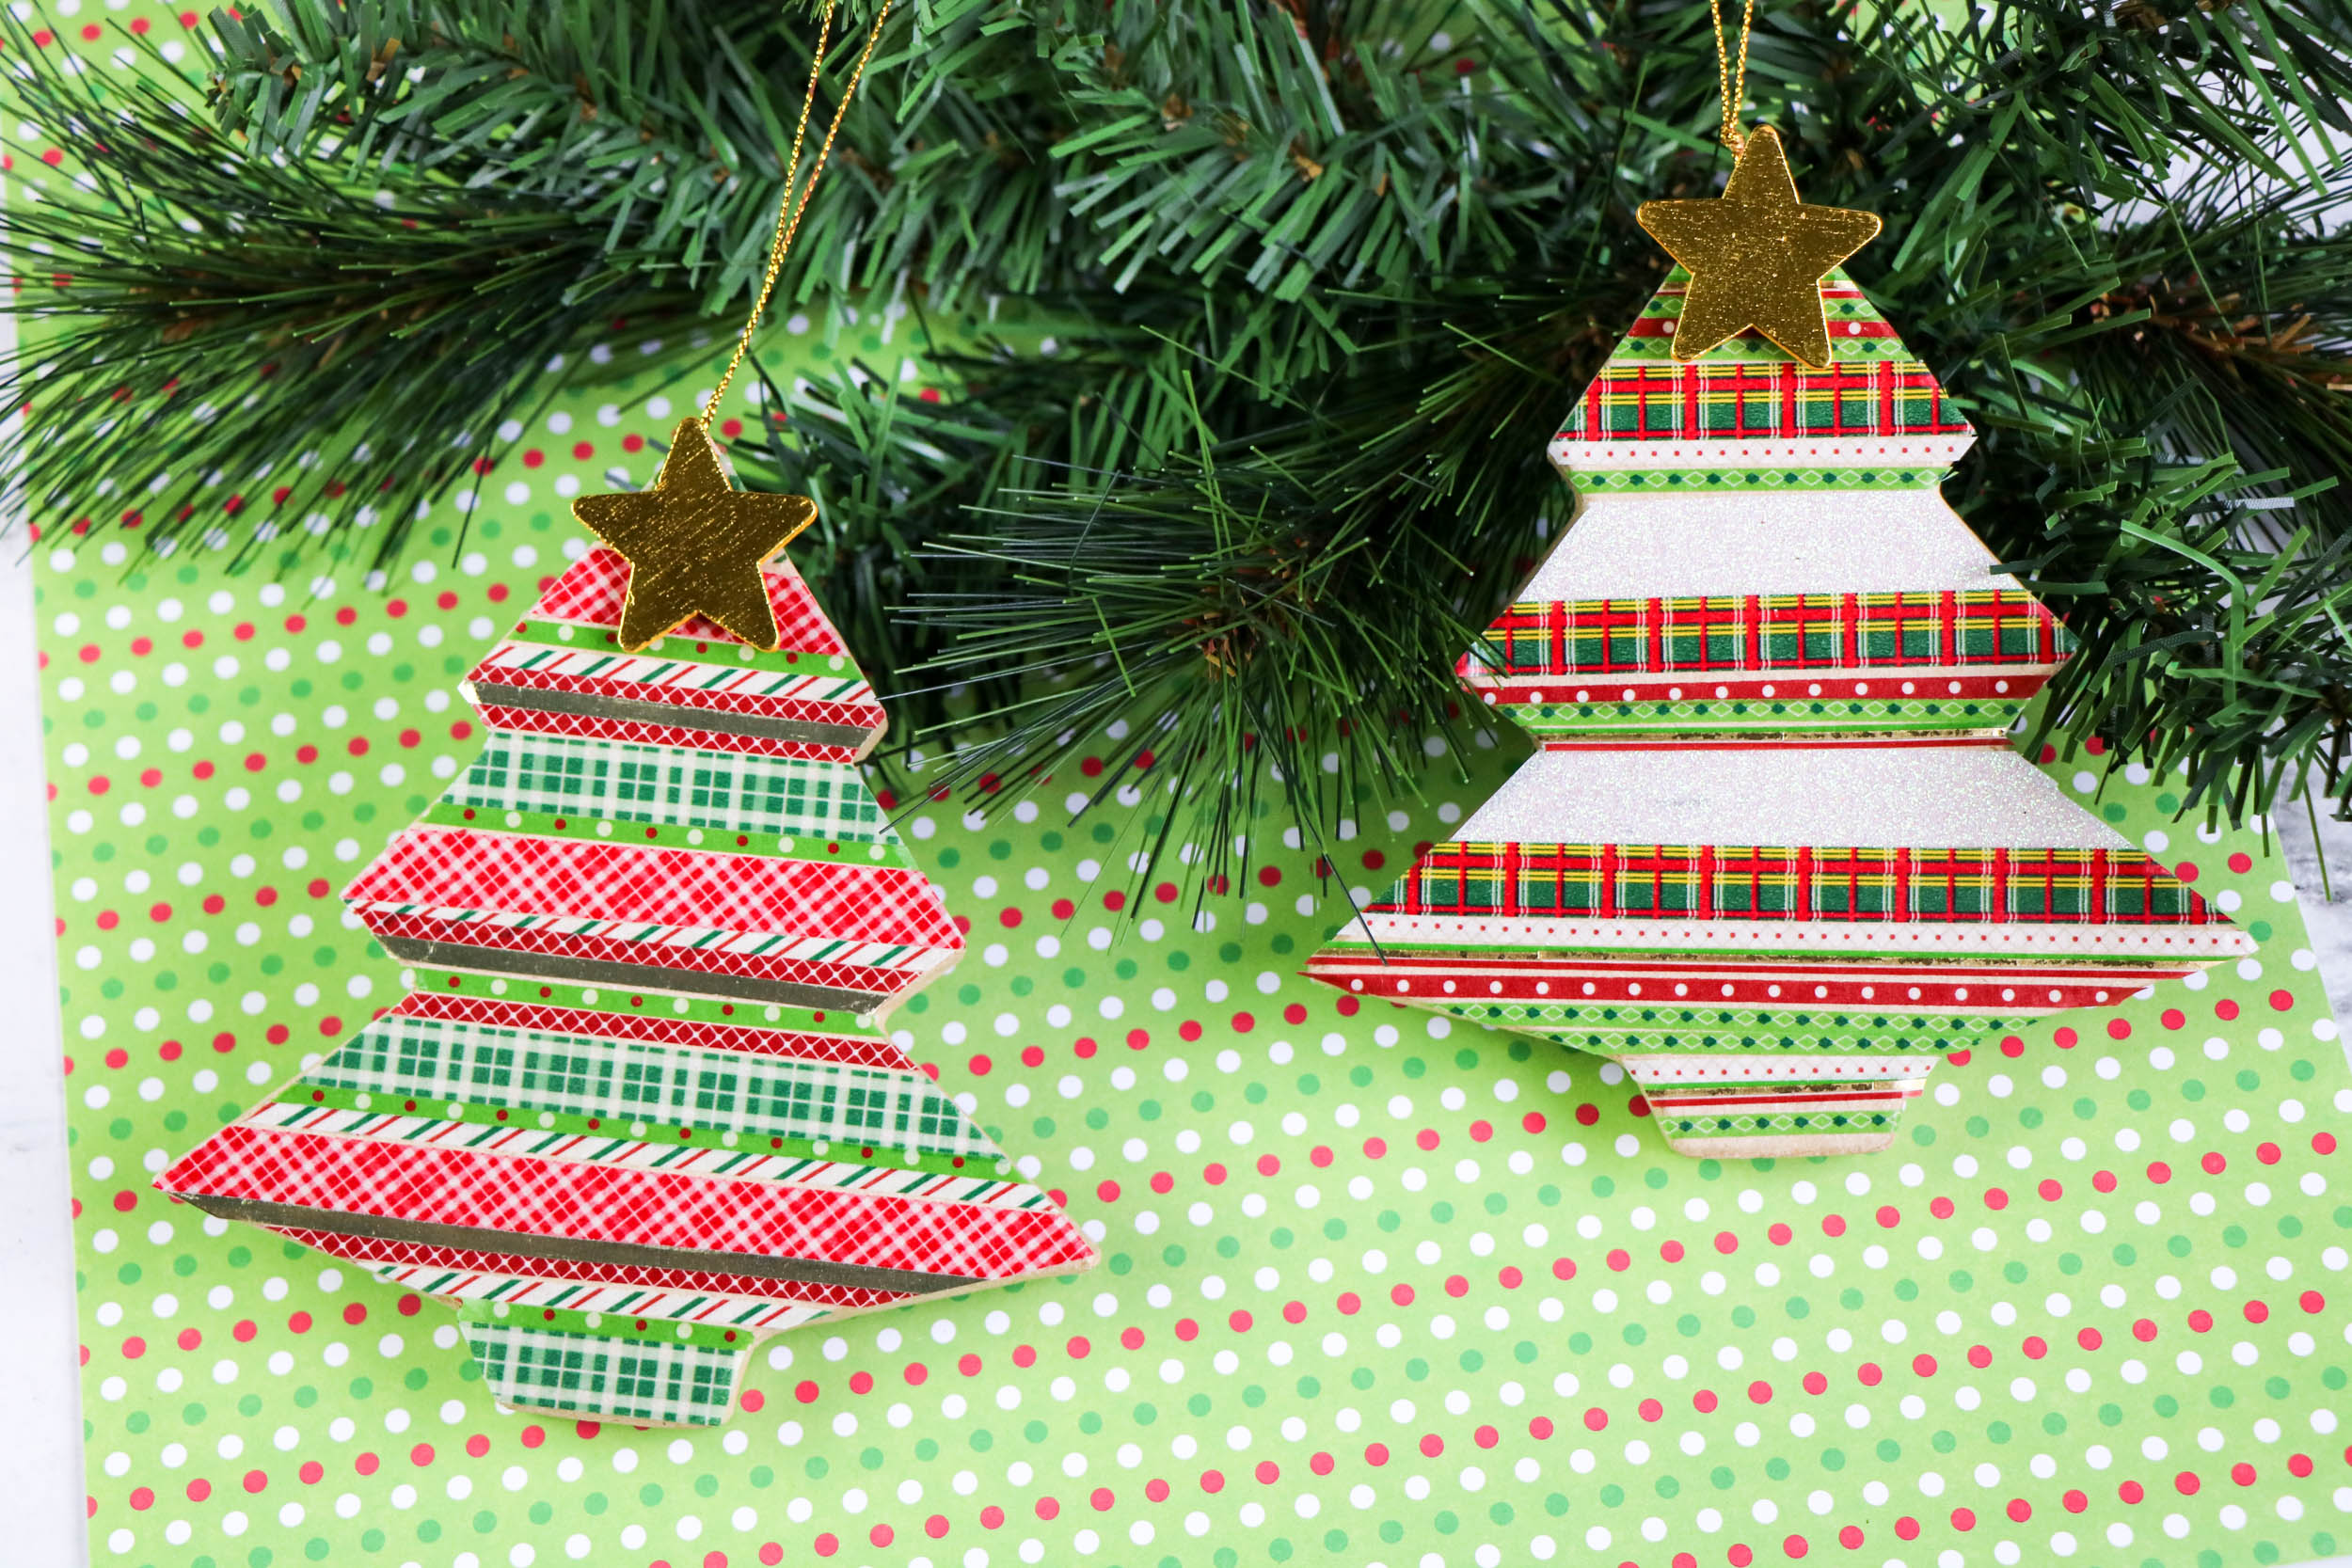 How to Make a Washi Tape Christmas Ornament